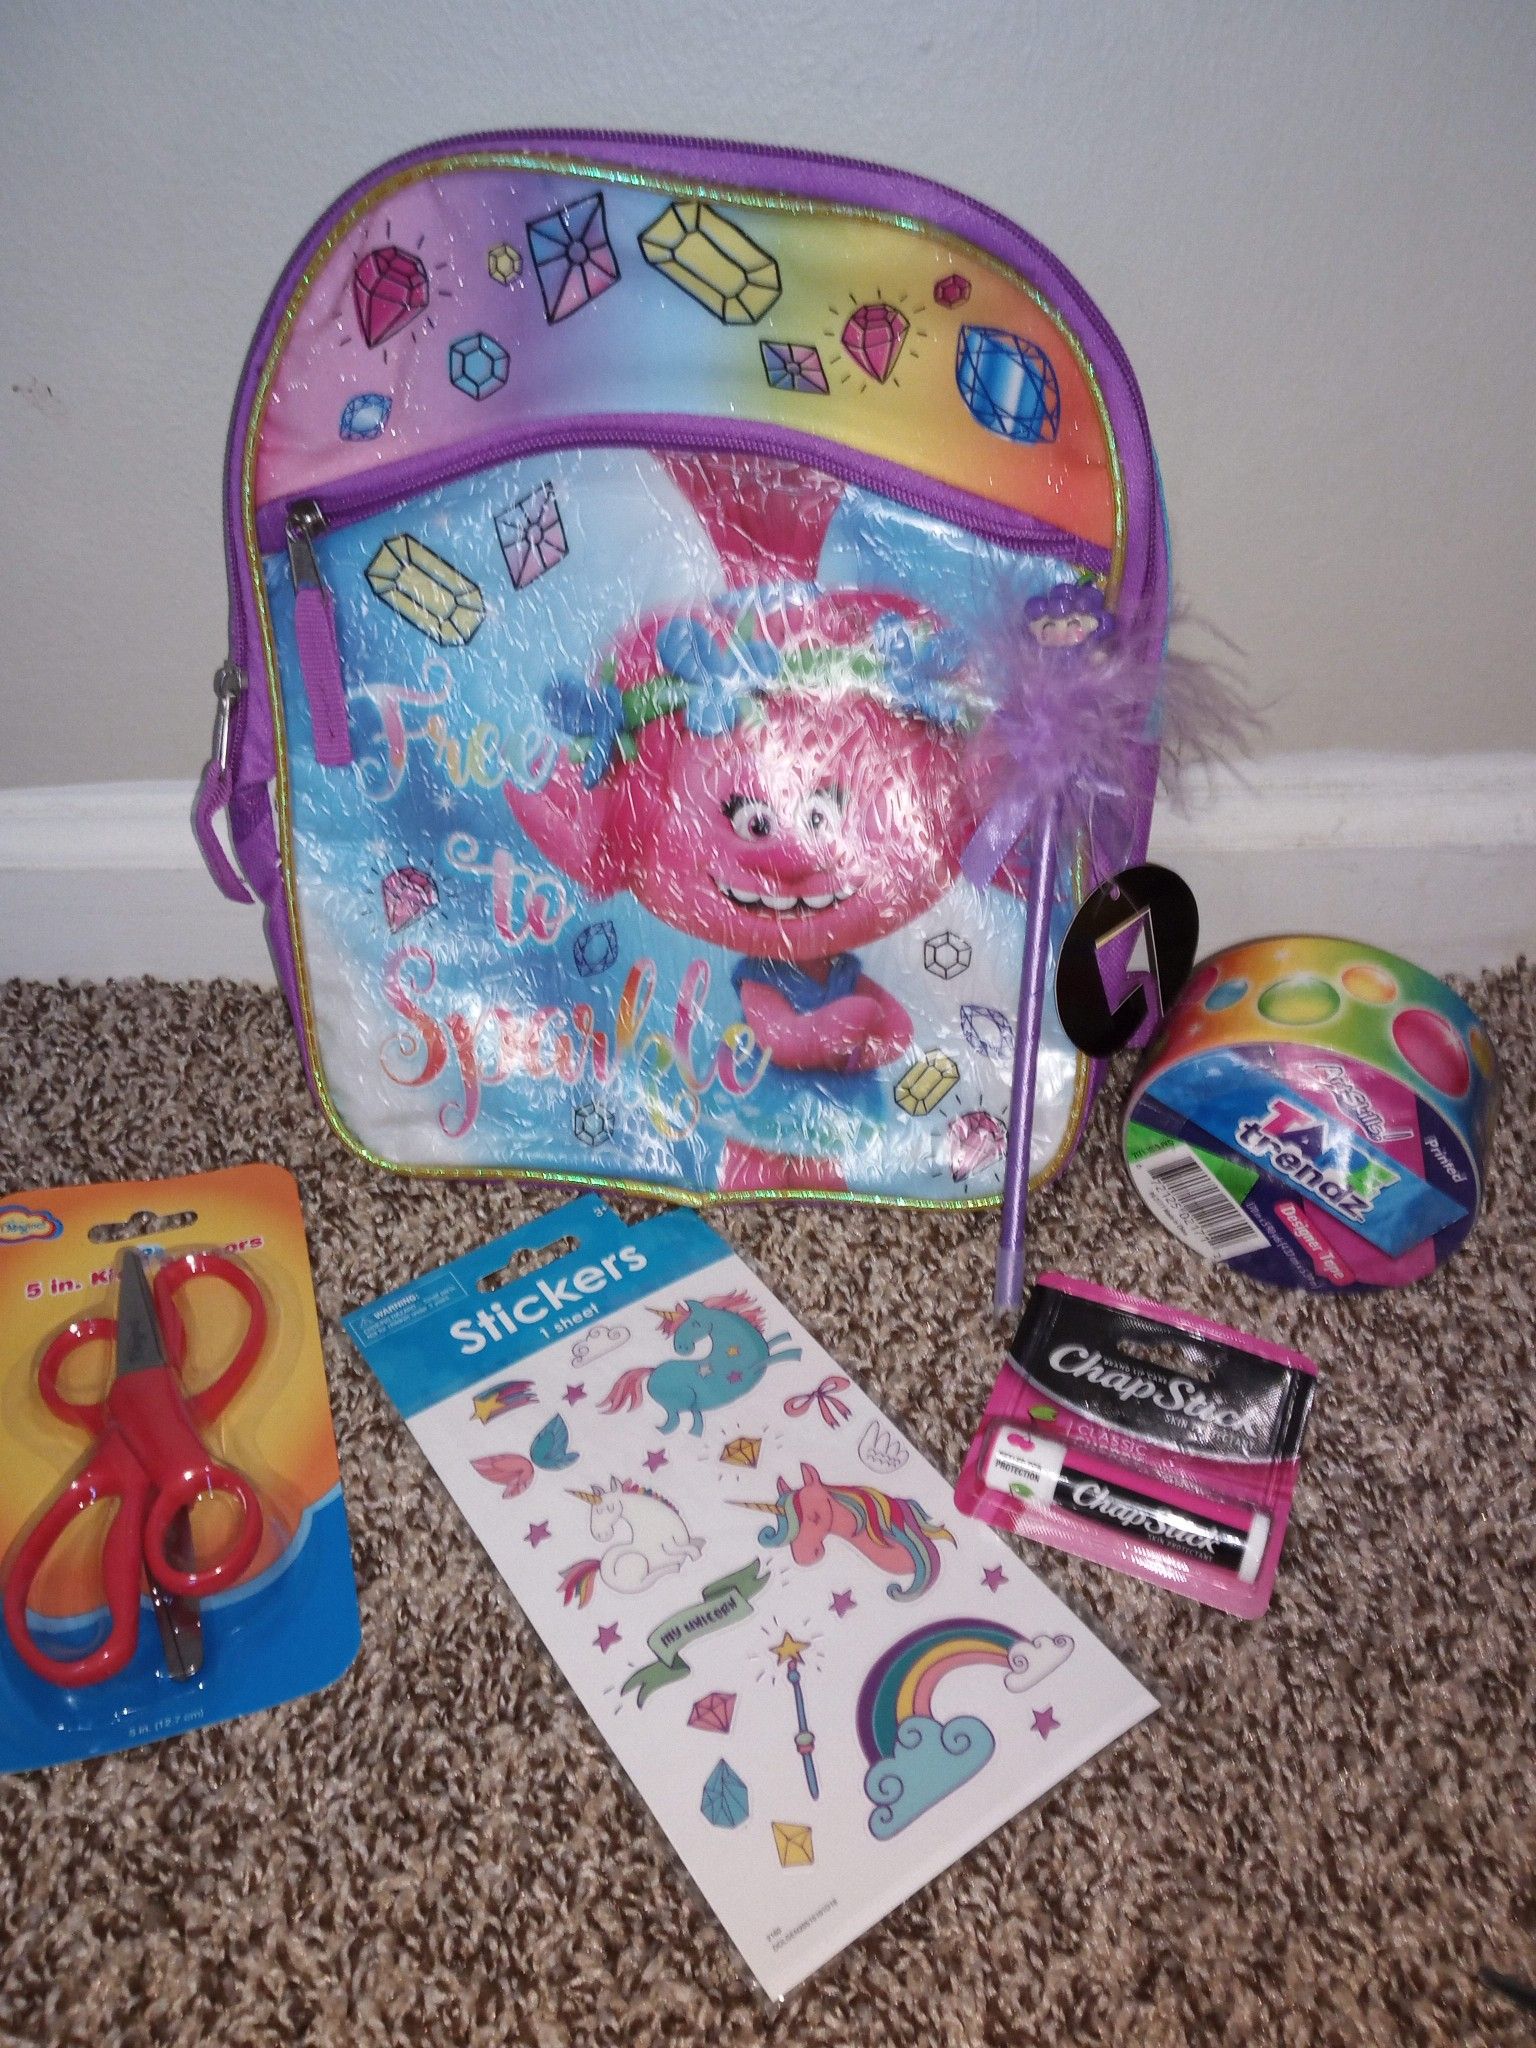 Trolls girls Backpack "Back to School" supplies. brand New!